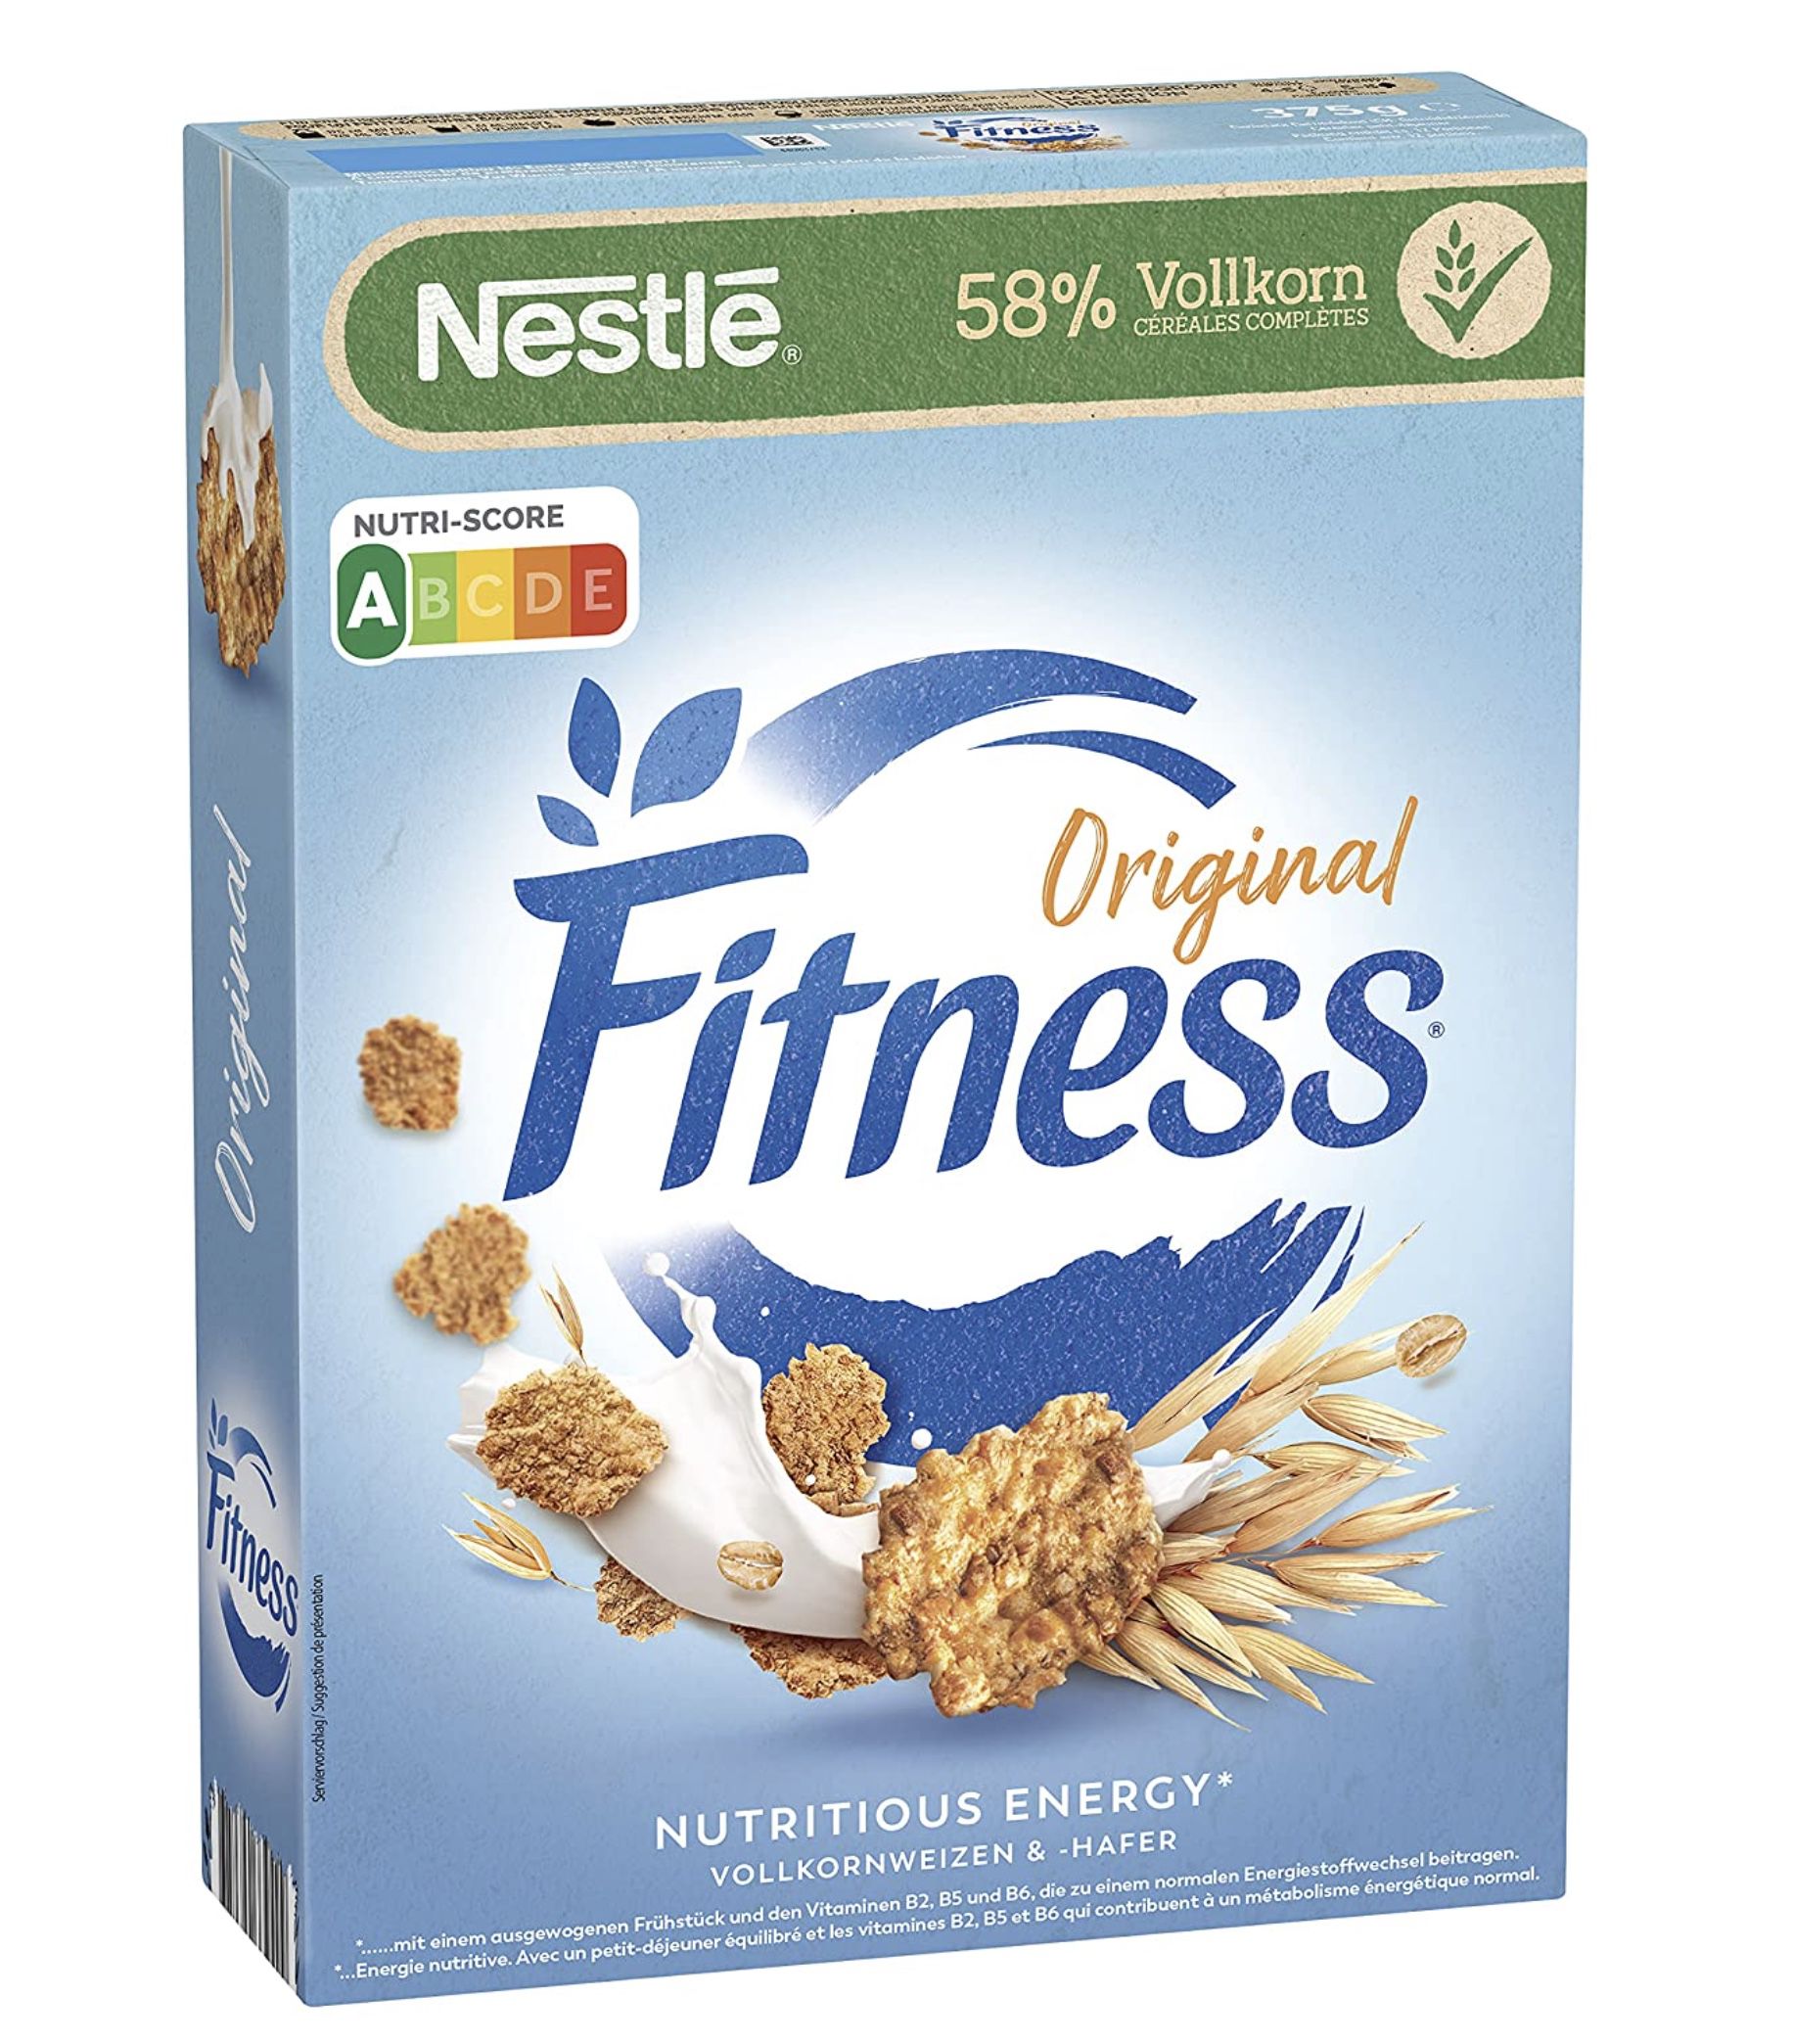 7x Nestlé Fitness Frühstücks-Flakes (58% Vollkorn & wenig Zucker) ab 18,99€ (statt 27€)